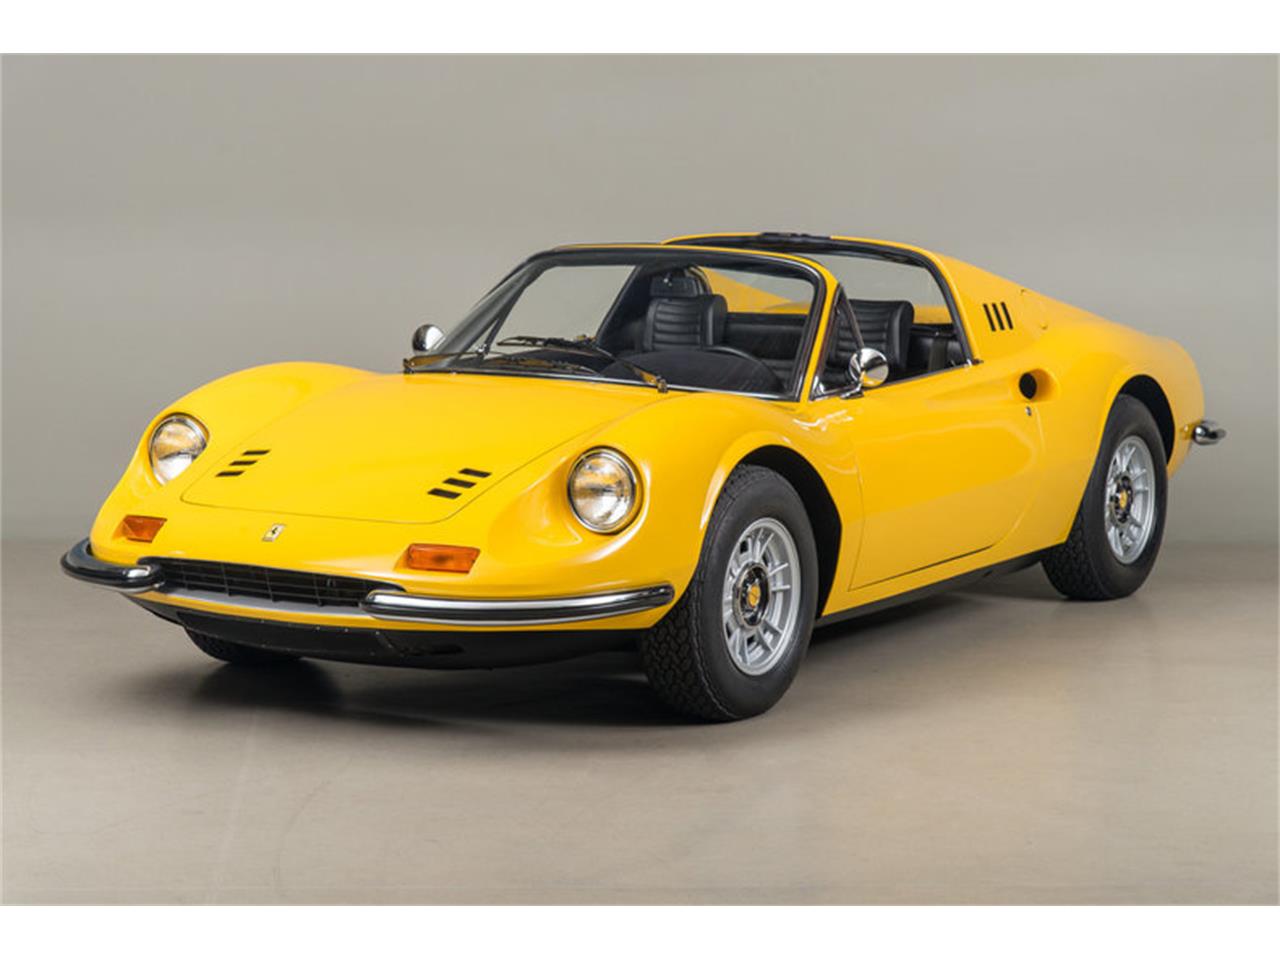 Classic Ferrari for Sale on ClassicCars.com